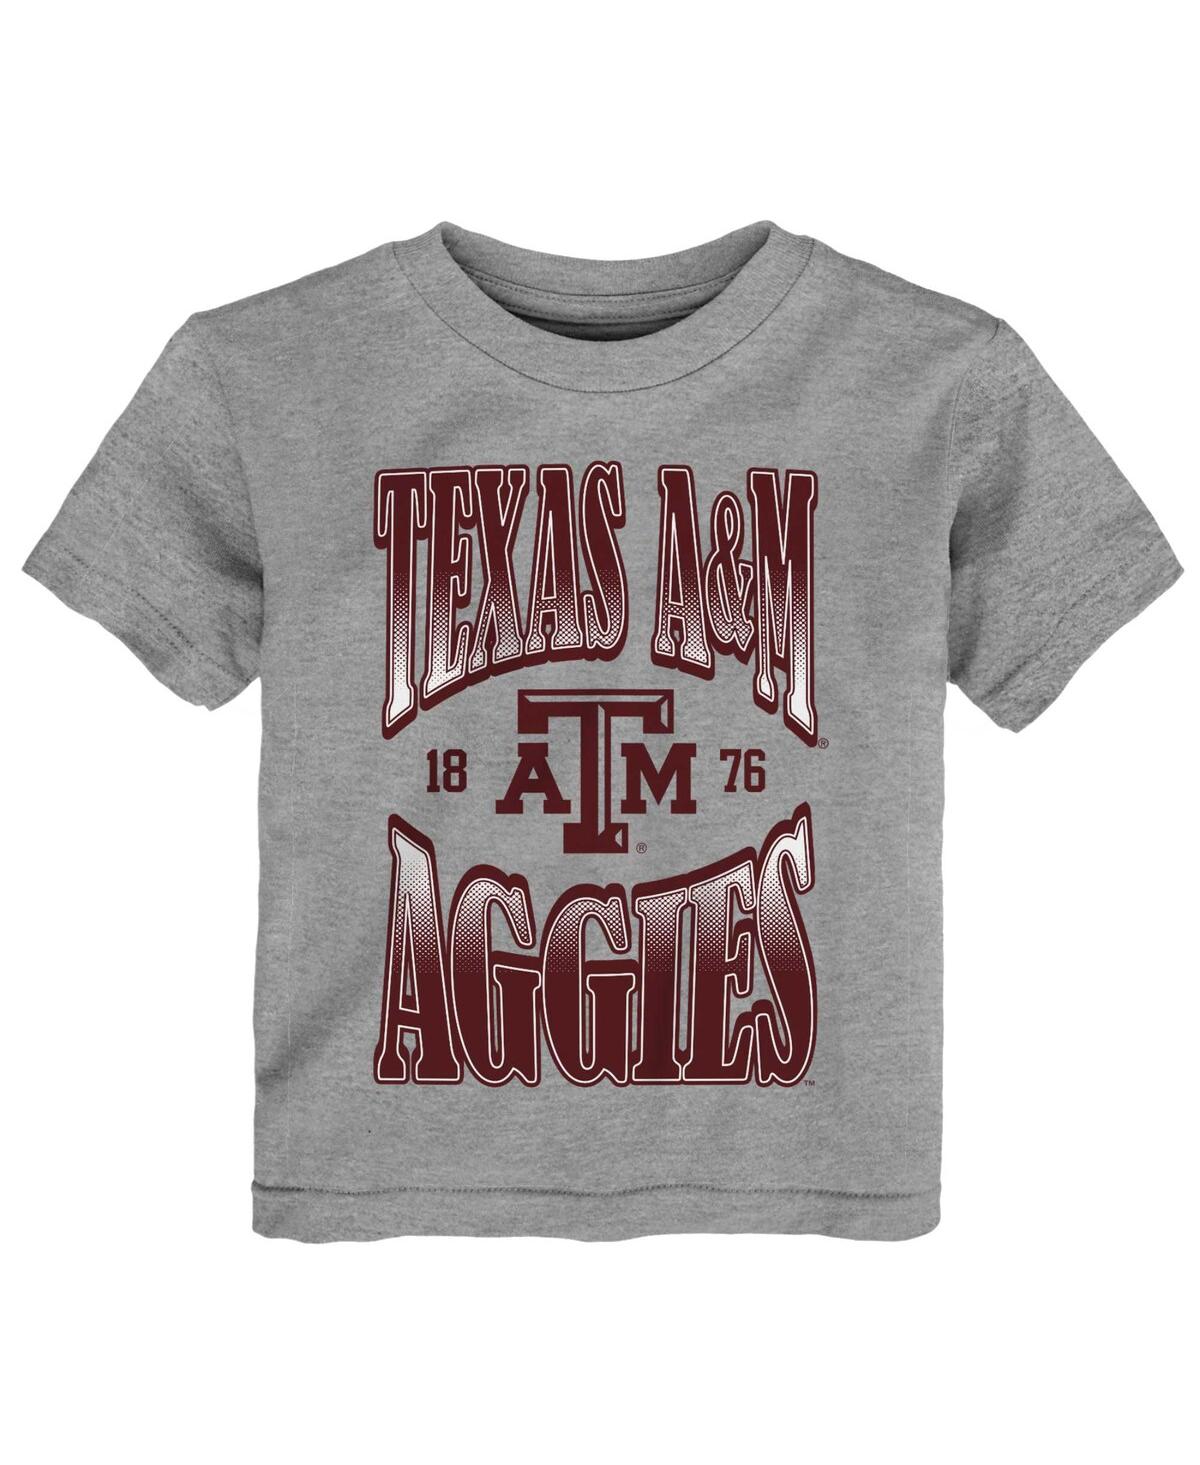 Outerstuff Babies' Toddler Boys And Girls Heather Gray Texas A&m Aggies Top Class T-shirt